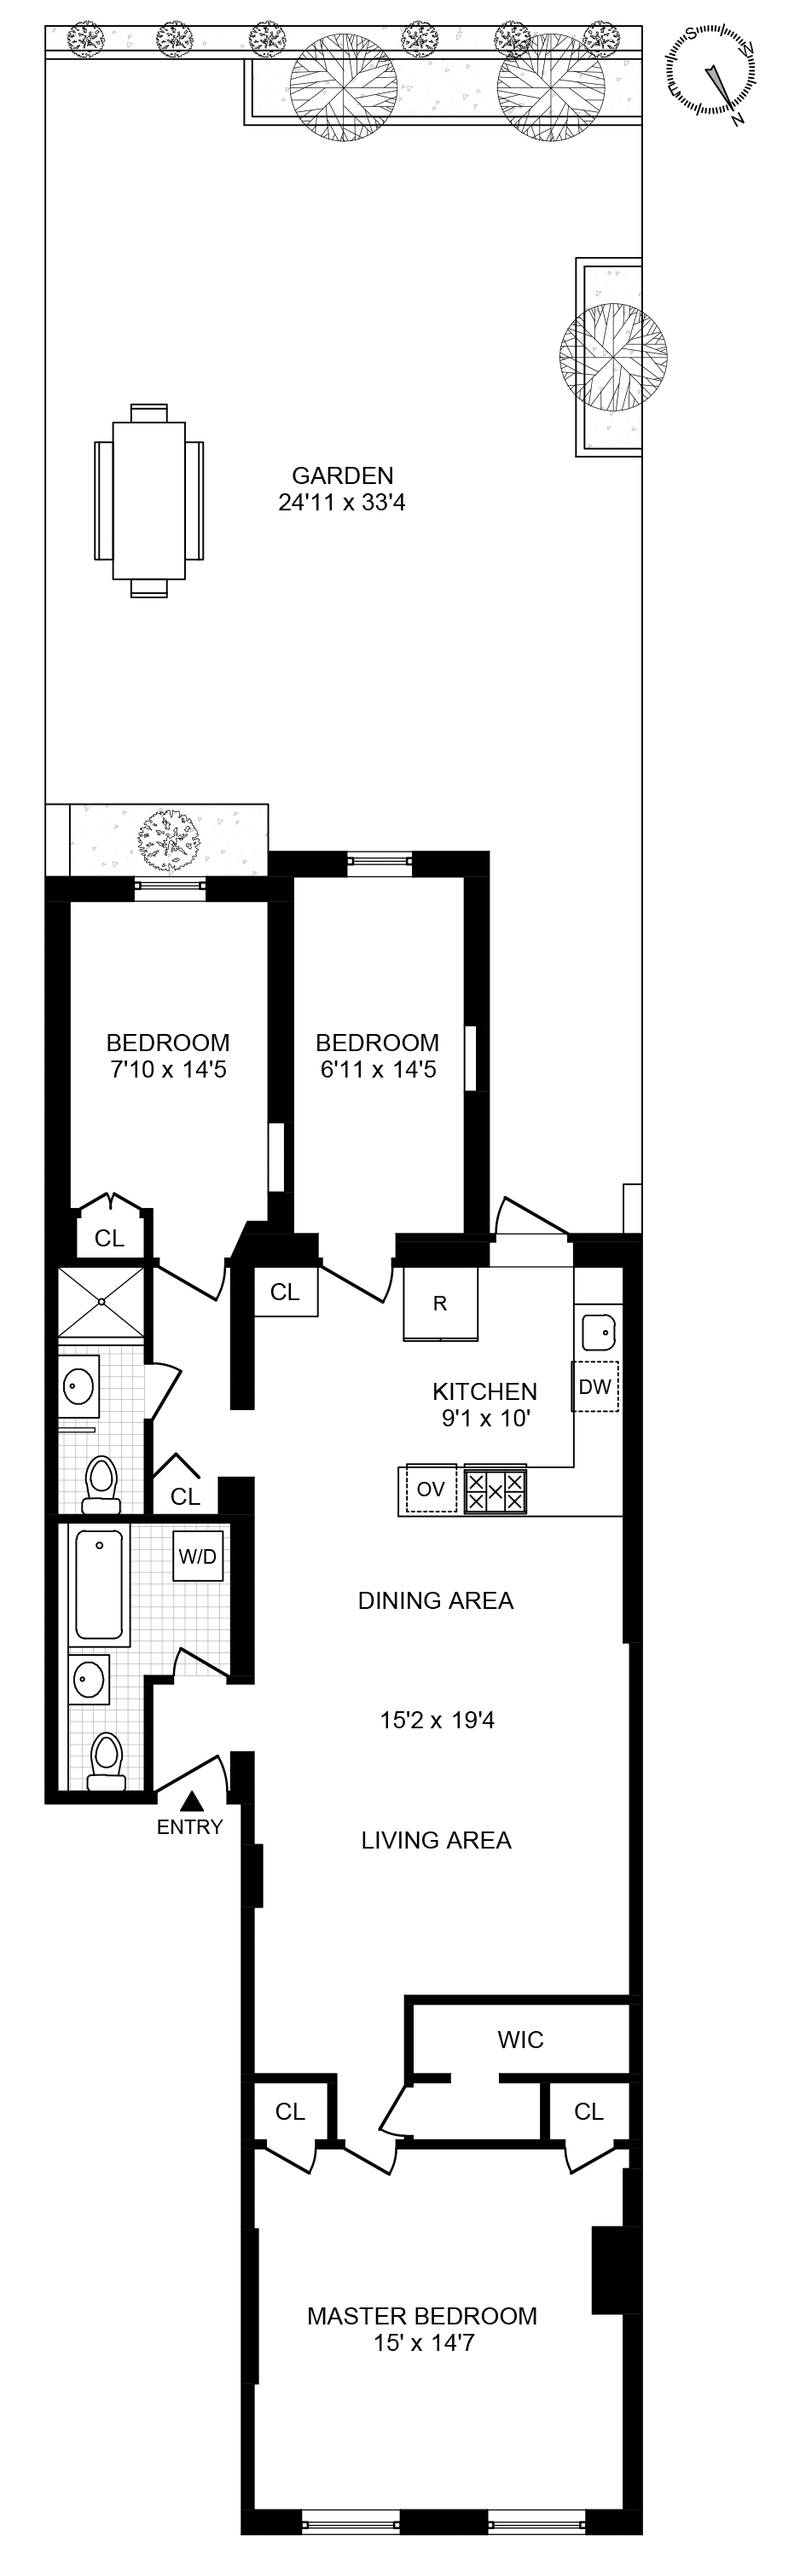 Floorplan for 452 West 23rd Street, A